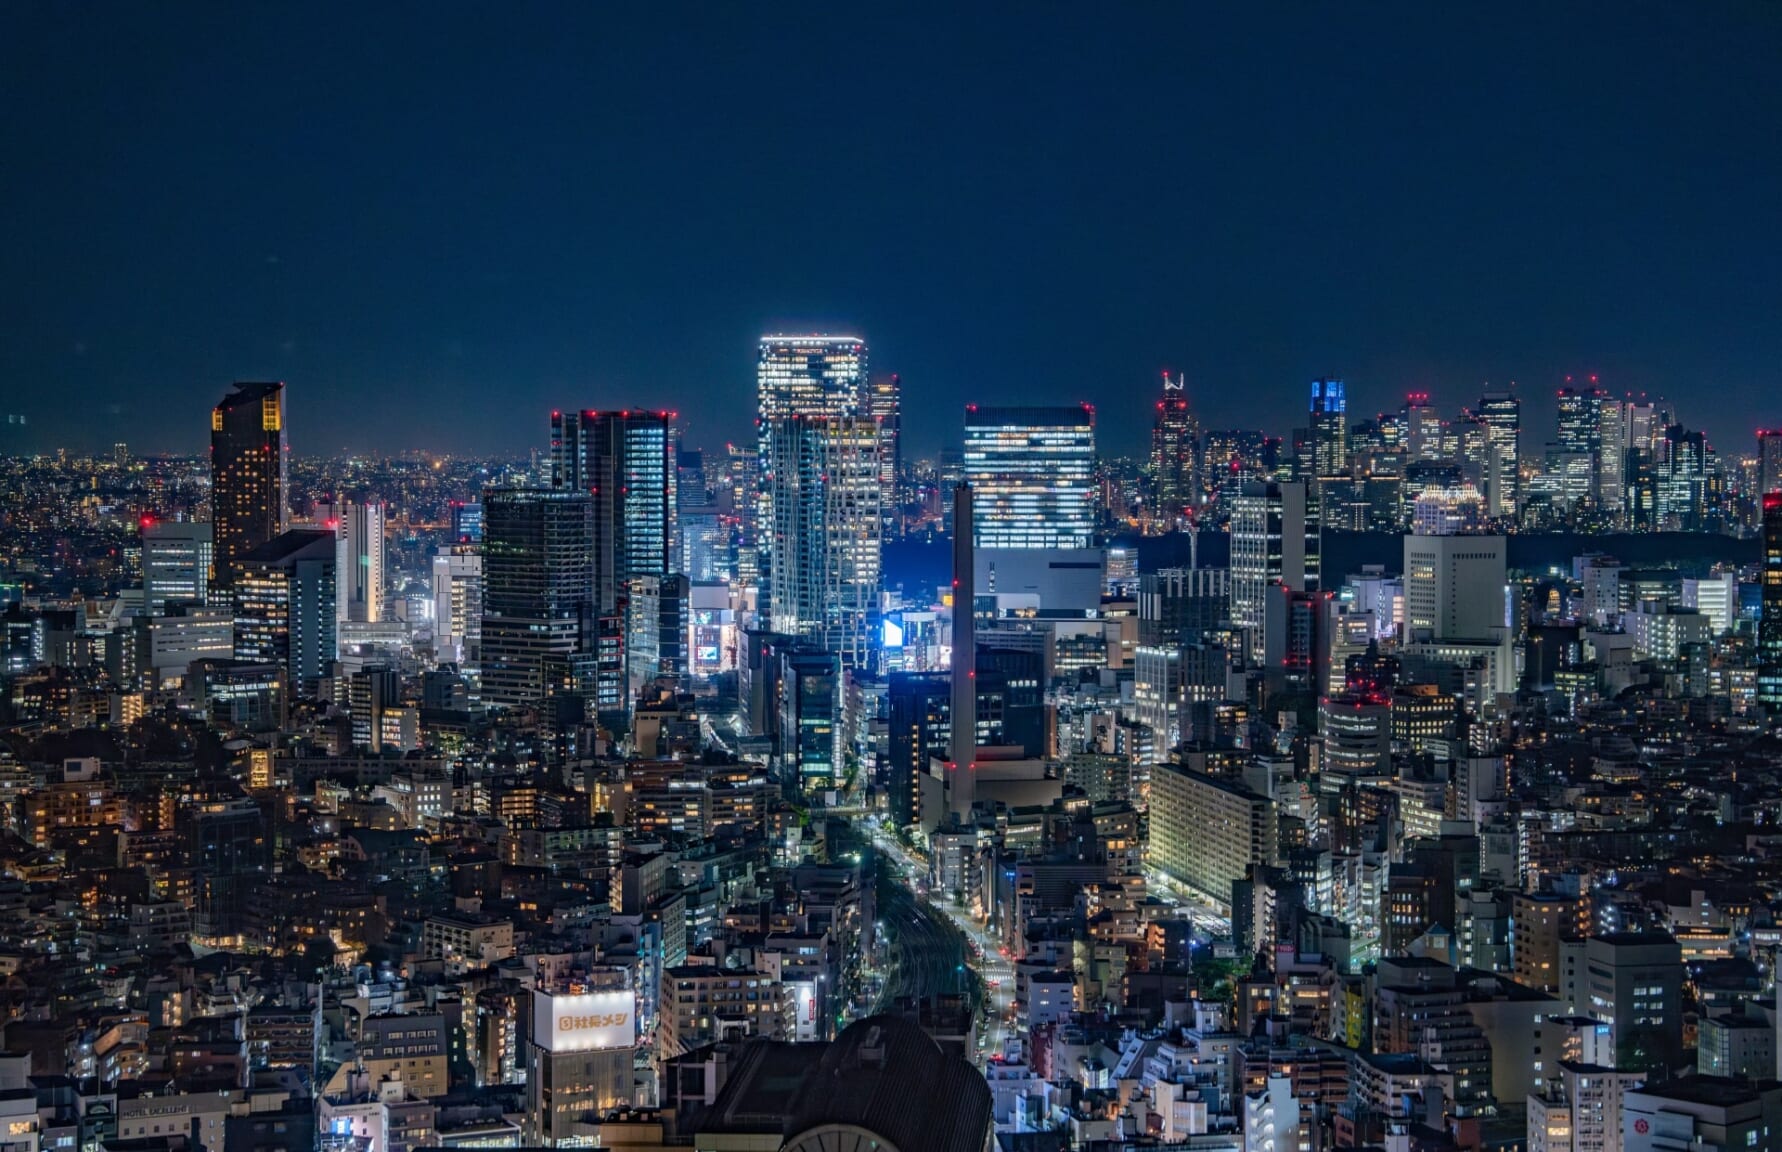 Cityscape of Roppongi at night